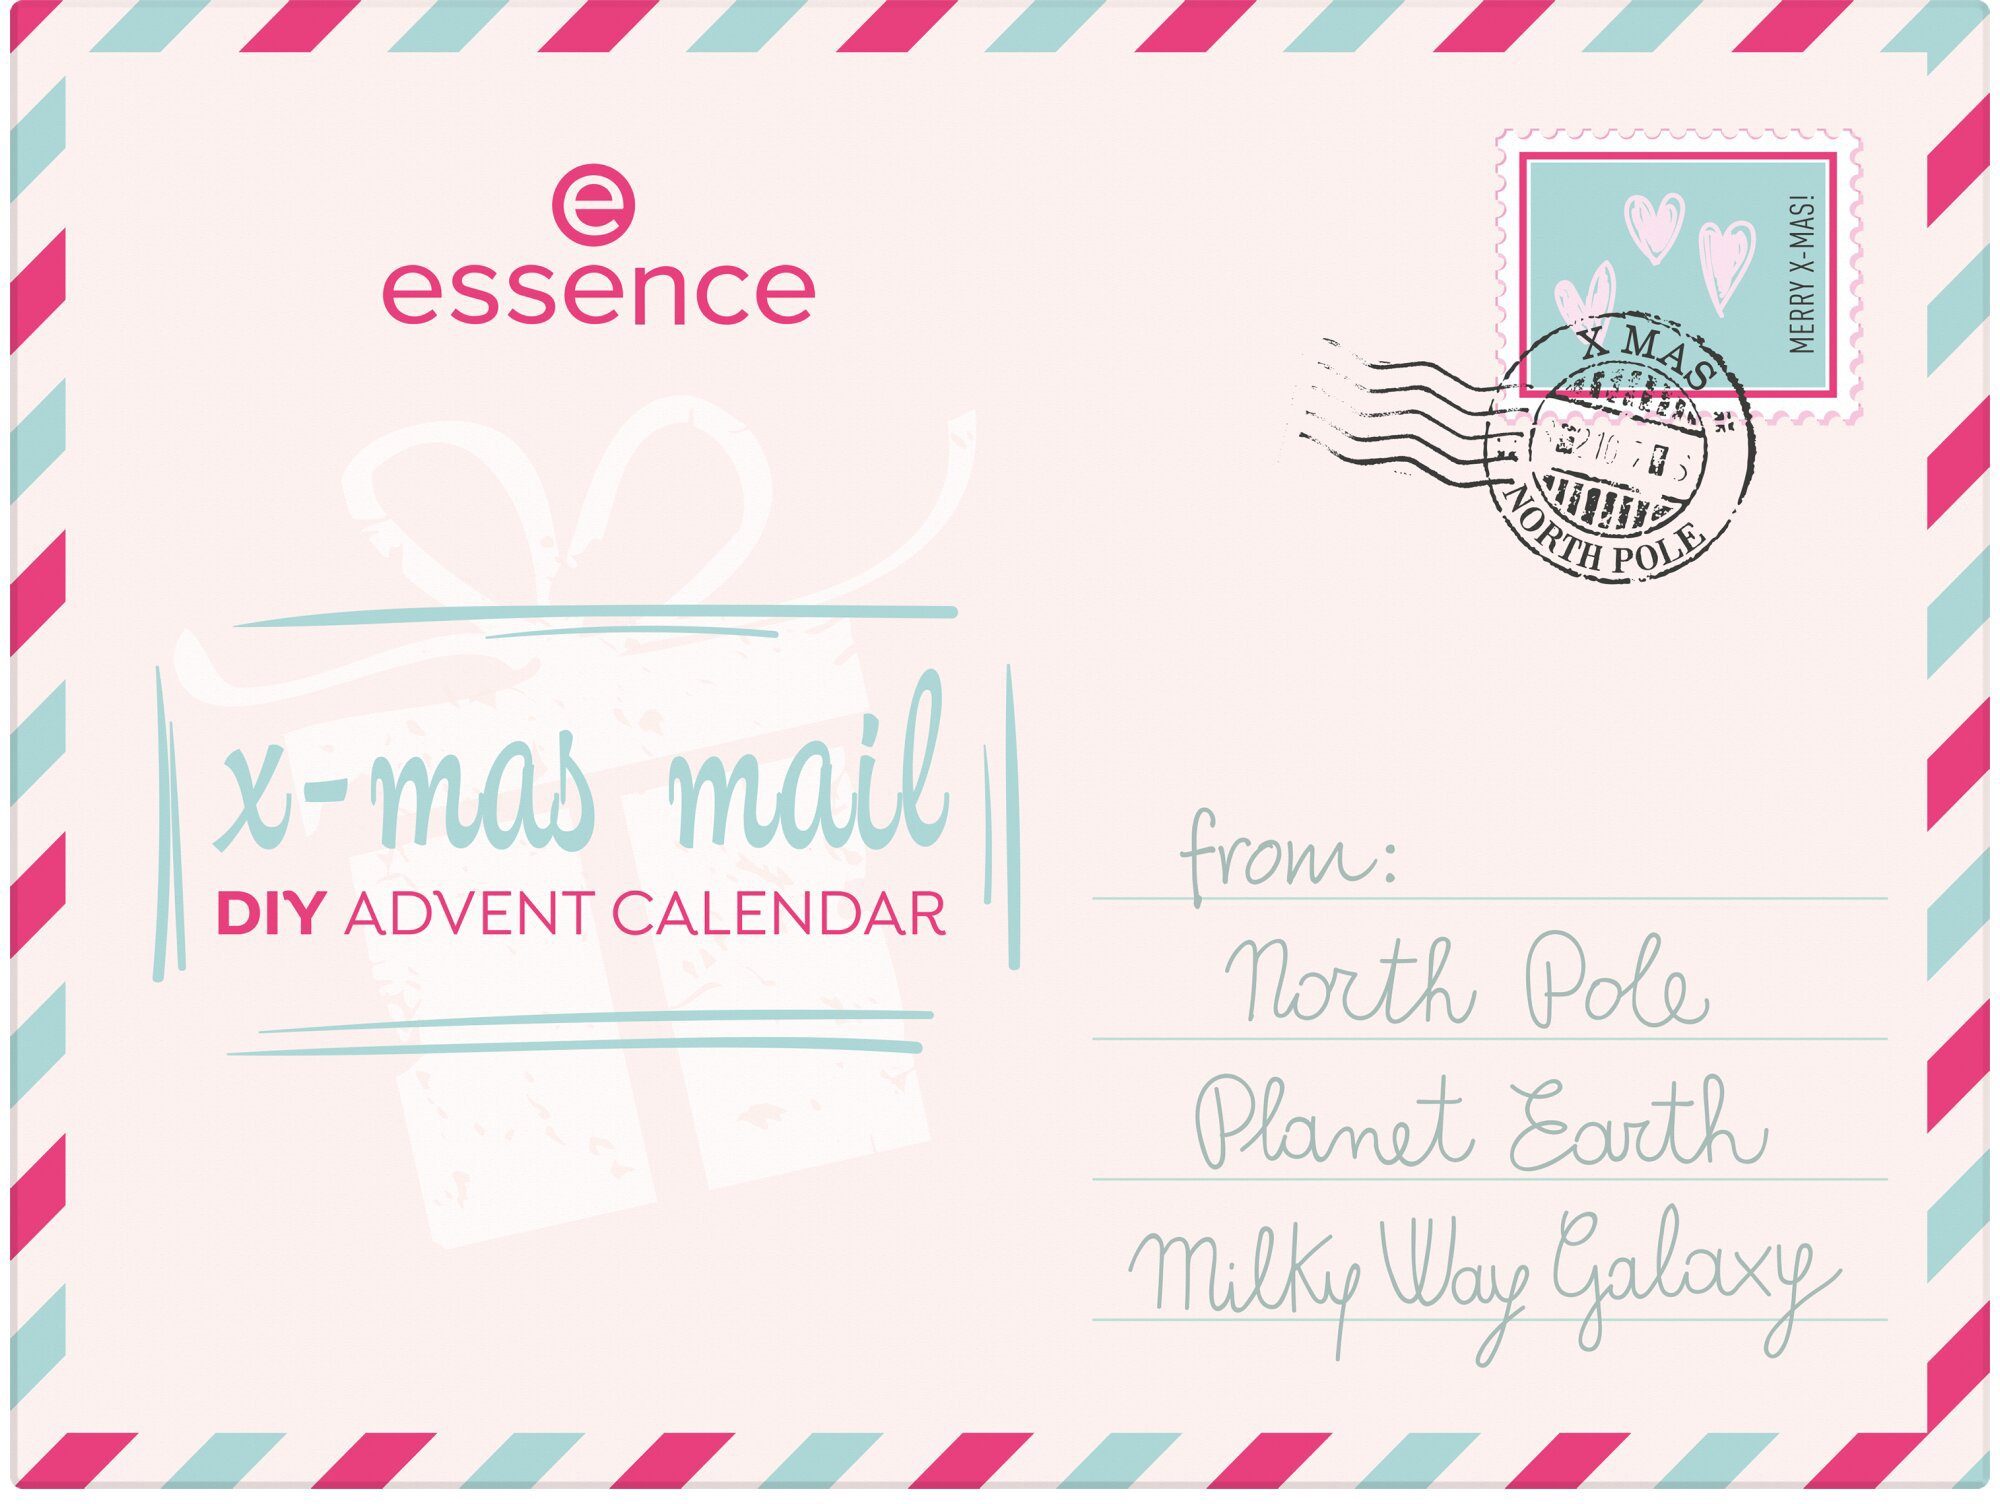 24-tlg) DIY ADVENT x-mas CALENDAR Essence (Set, mail Adventskalender